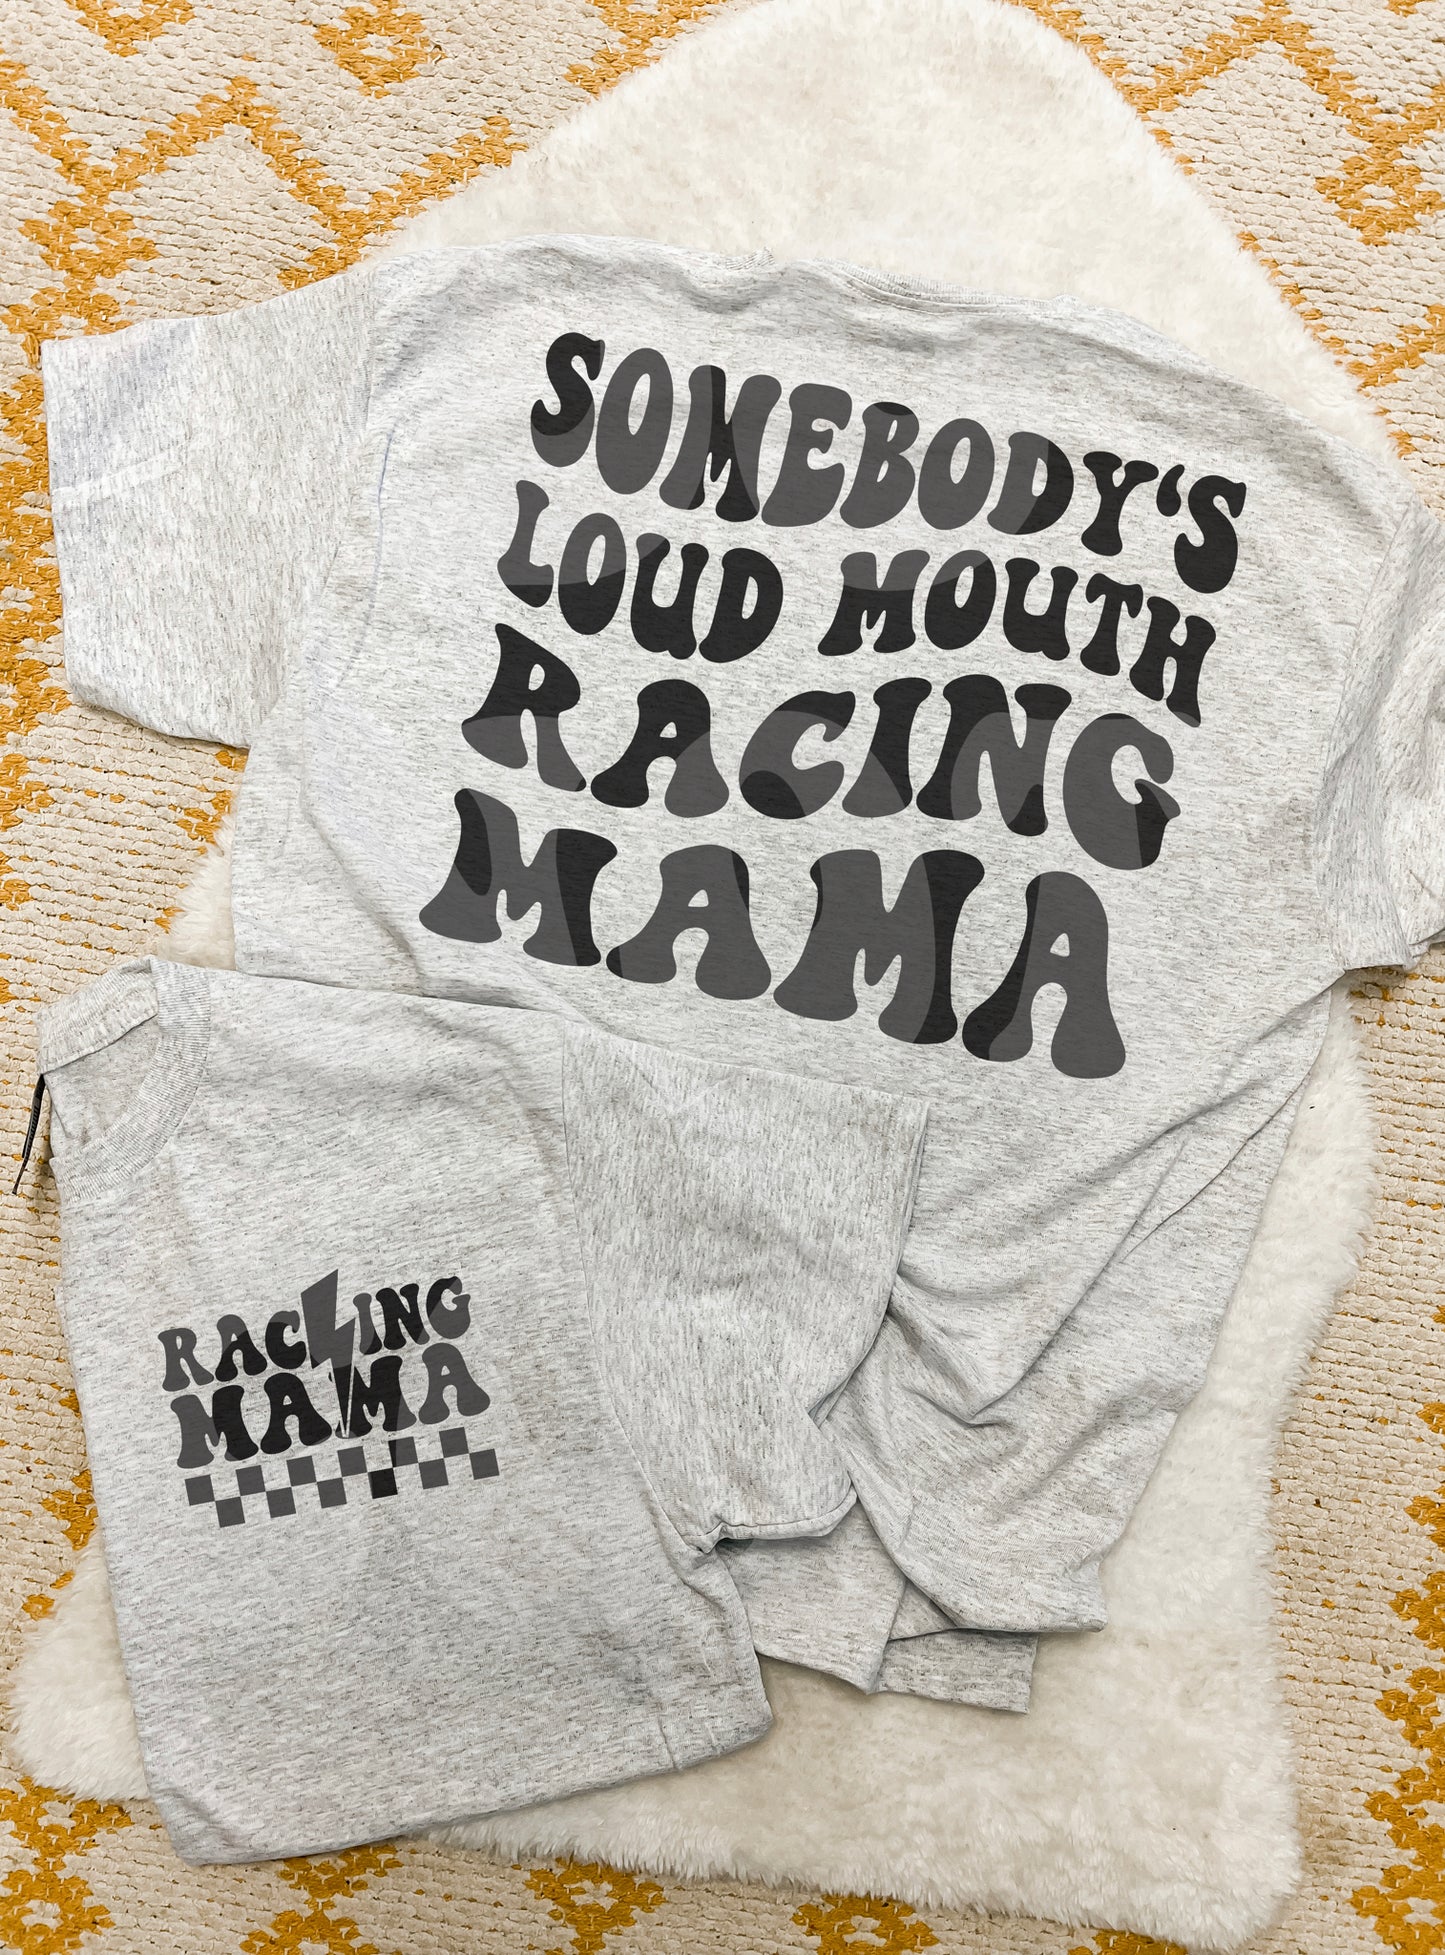 Loud Mouth Racing Mama - WS